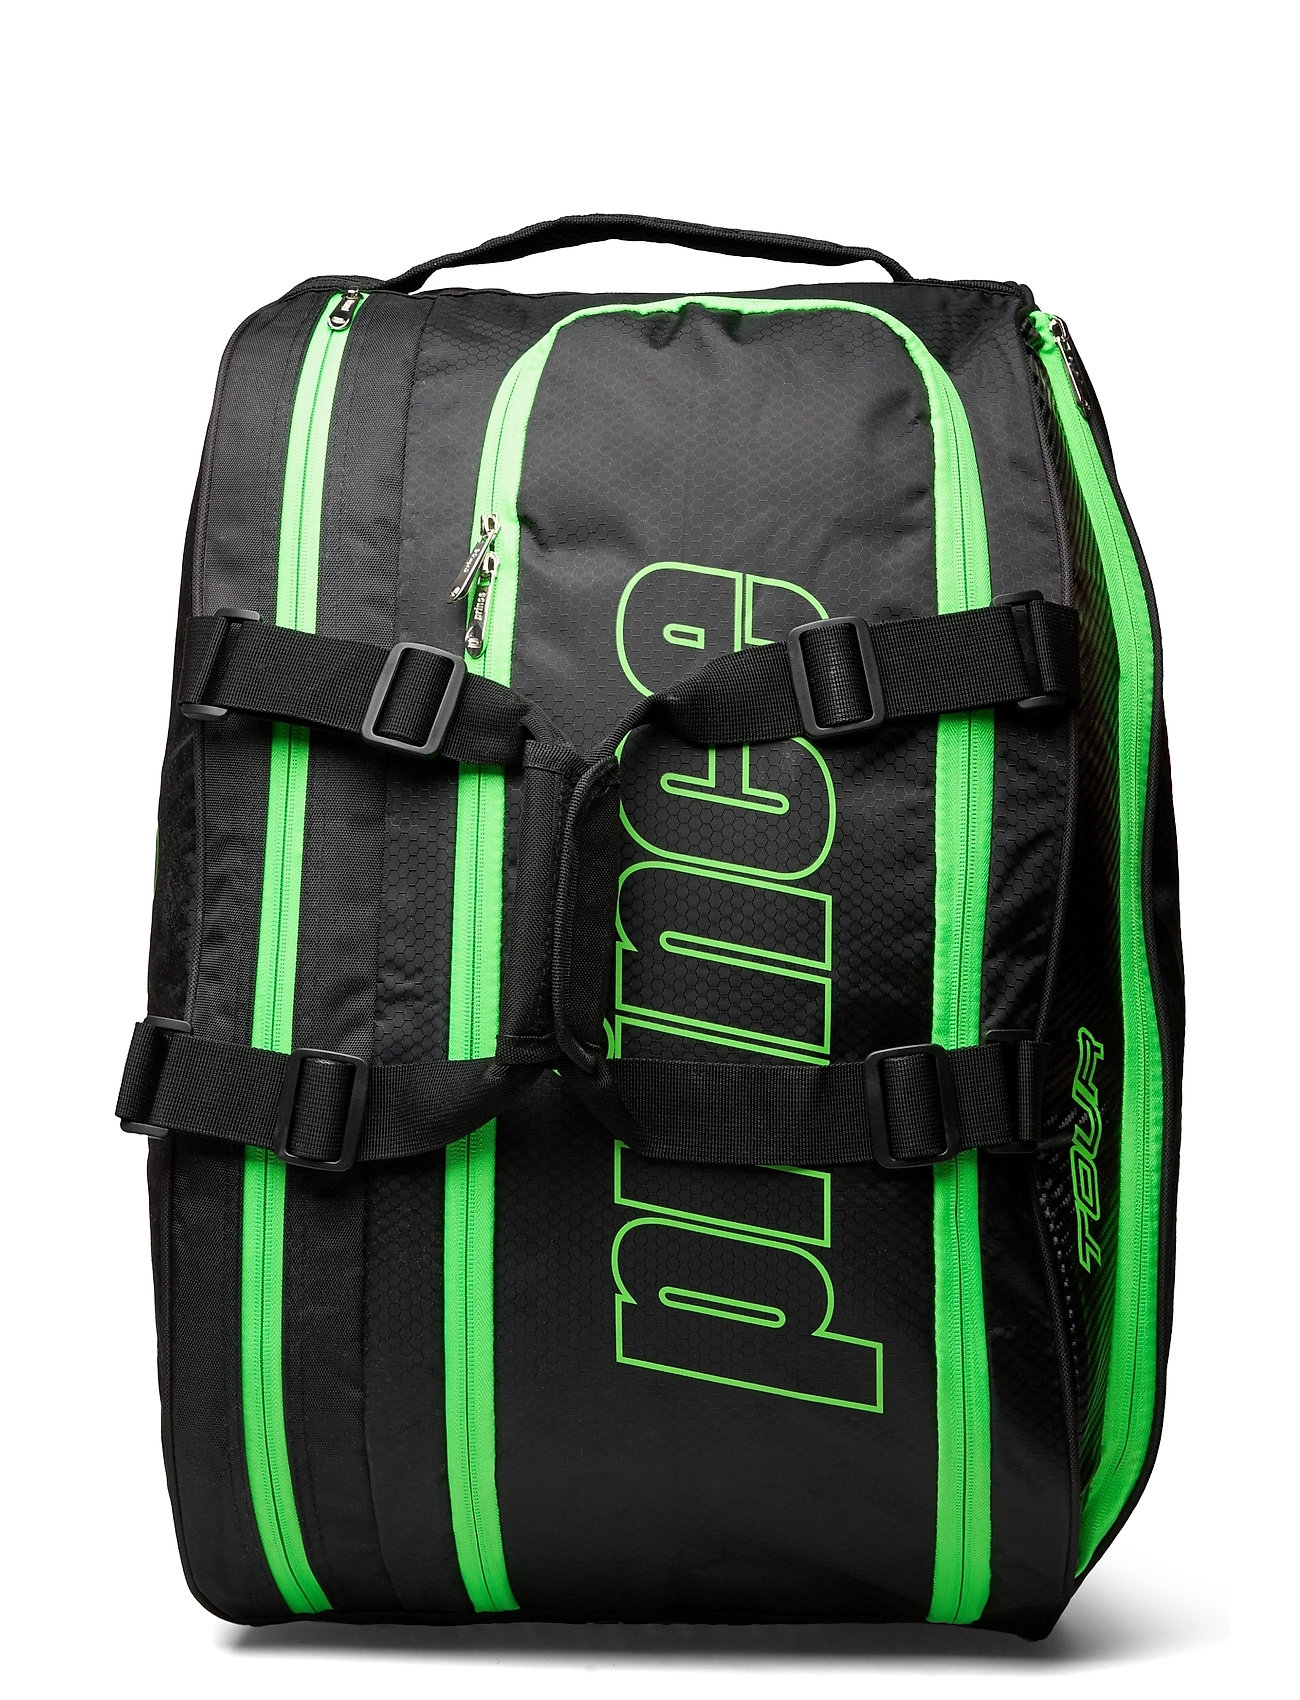 Prince Padel Prem Tour Racket Bag Accessories Sports Equipment Rackets & Equipment Racketsports Bags Musta Prince